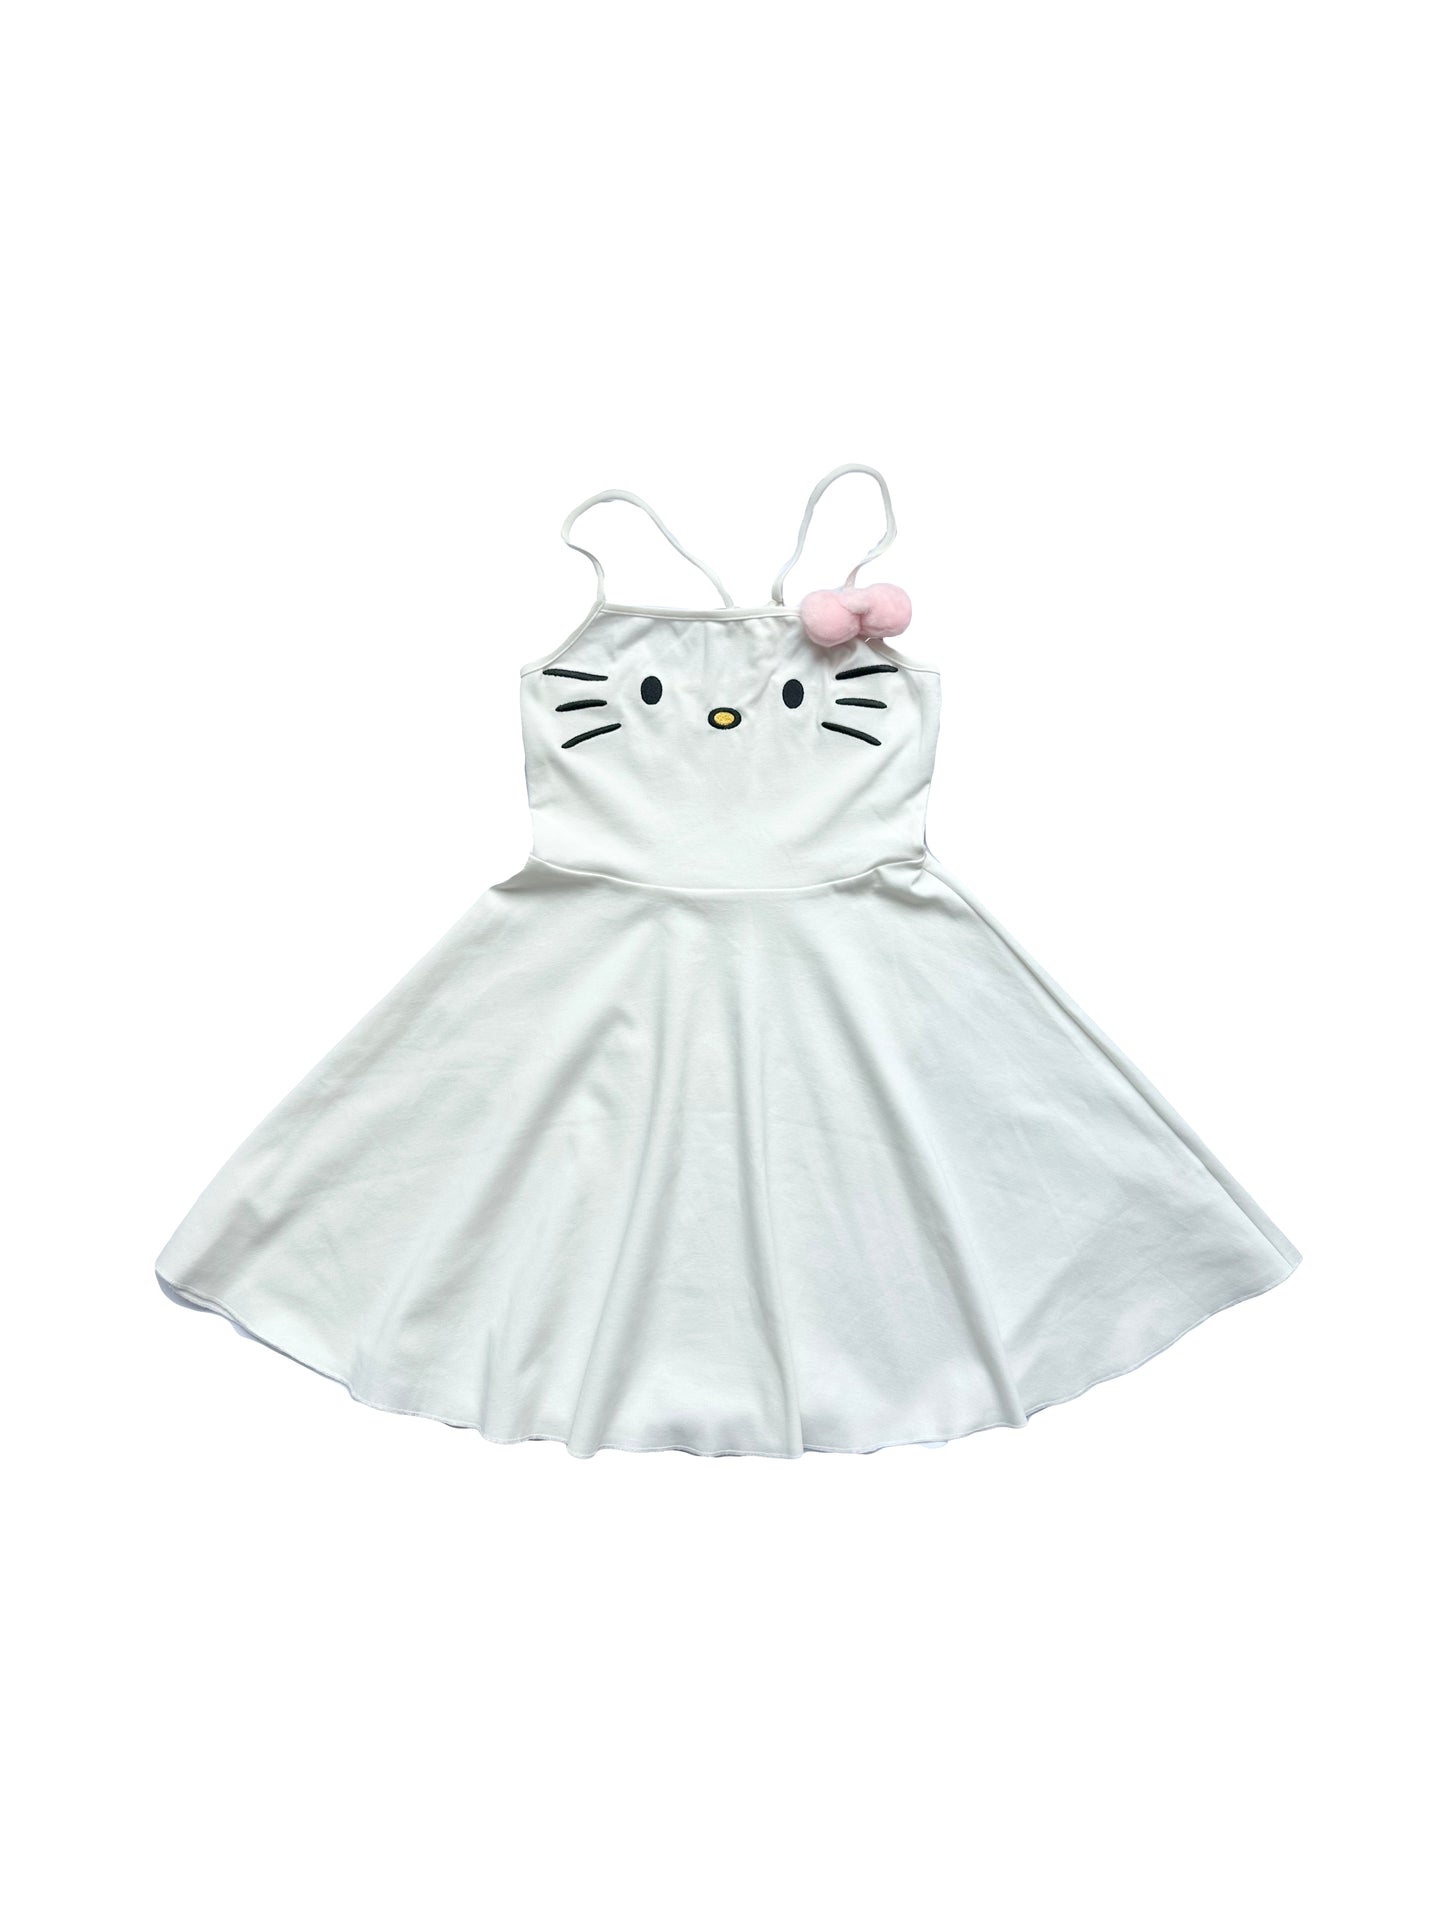 ArtByTastybabe Sweetheart kitty white dress